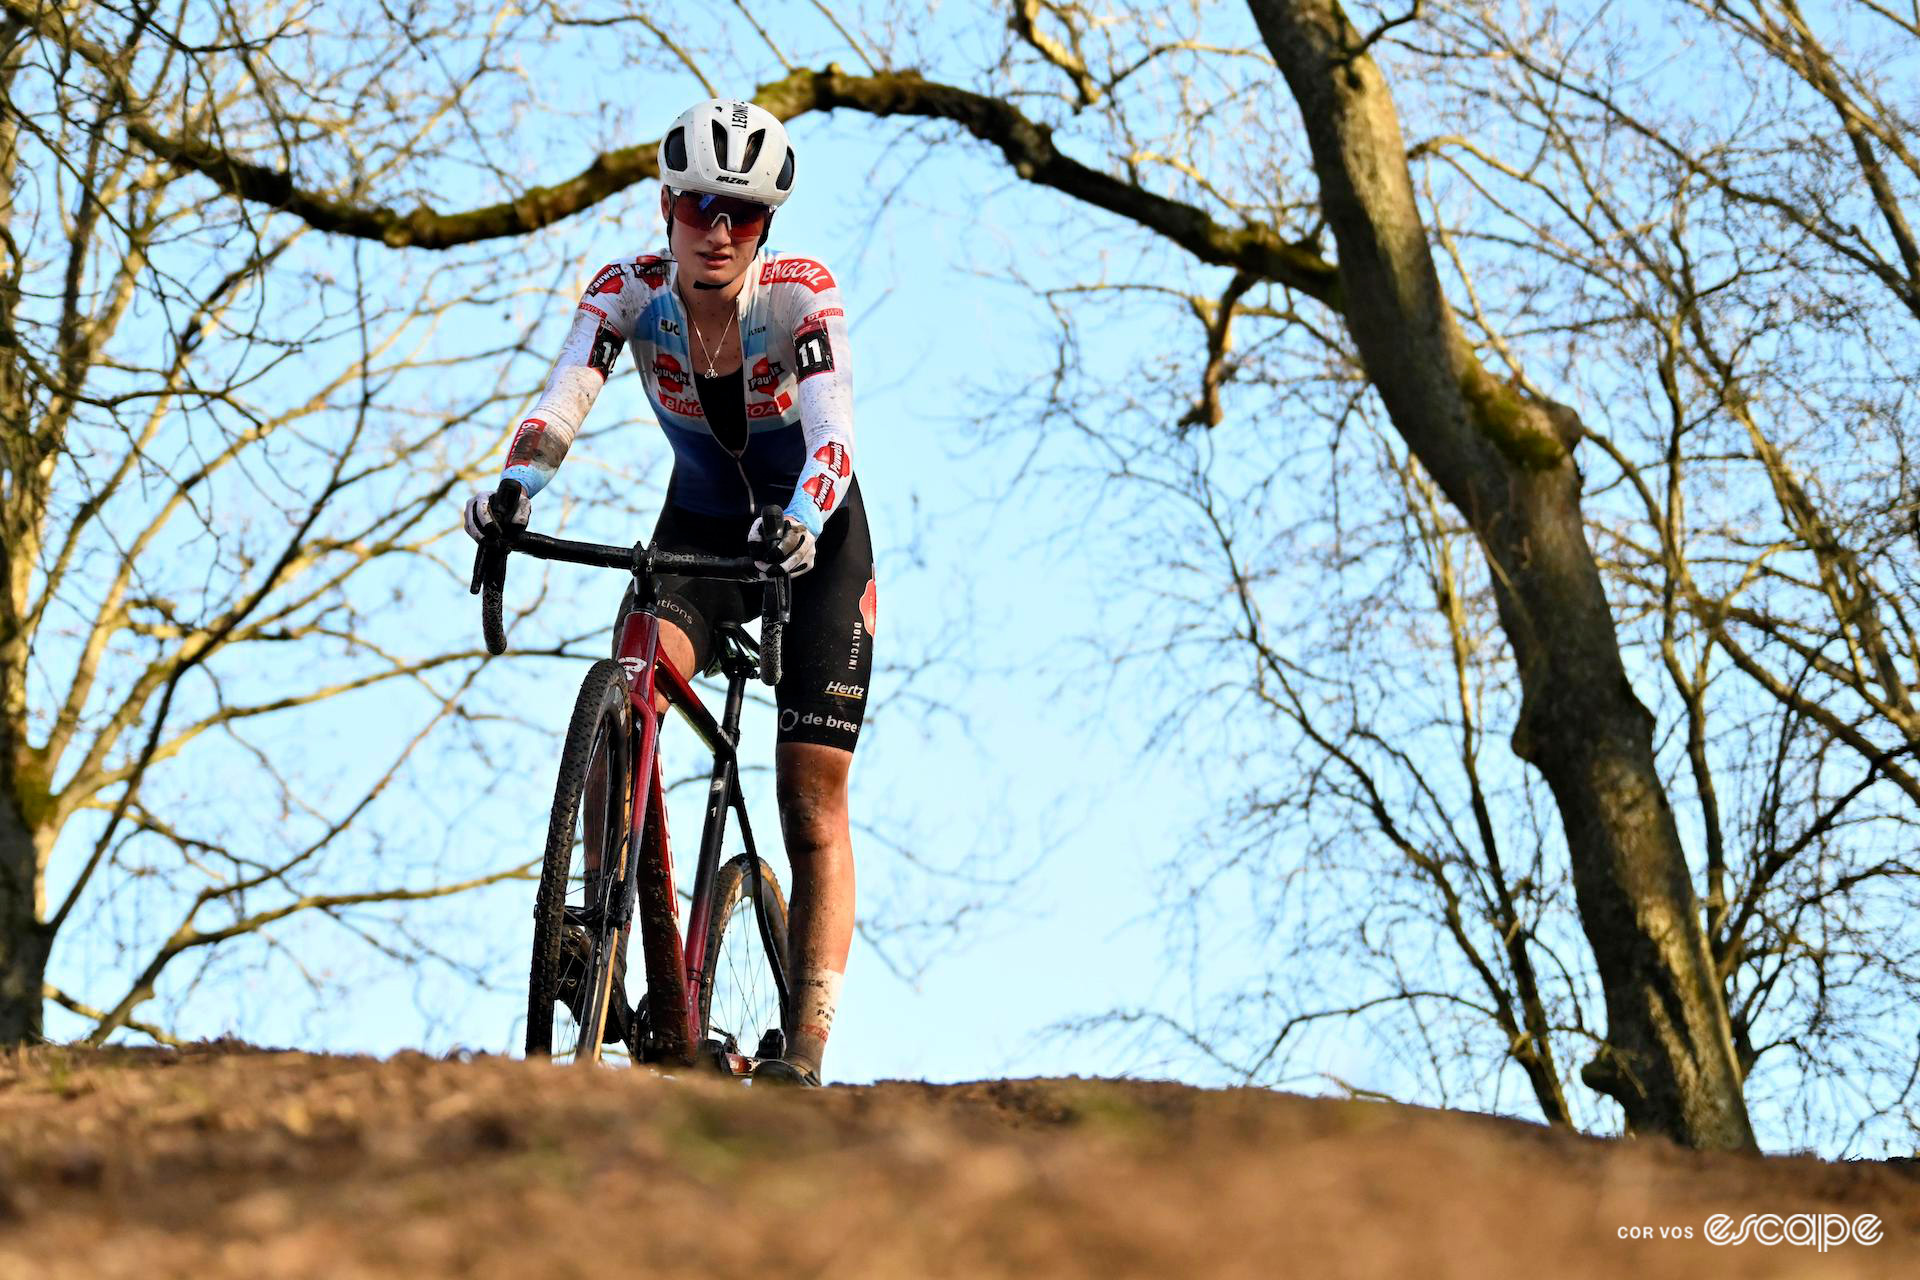 Under-23 World Cup leader Leonie Bentveld during Cyclocross World Cup Namur.